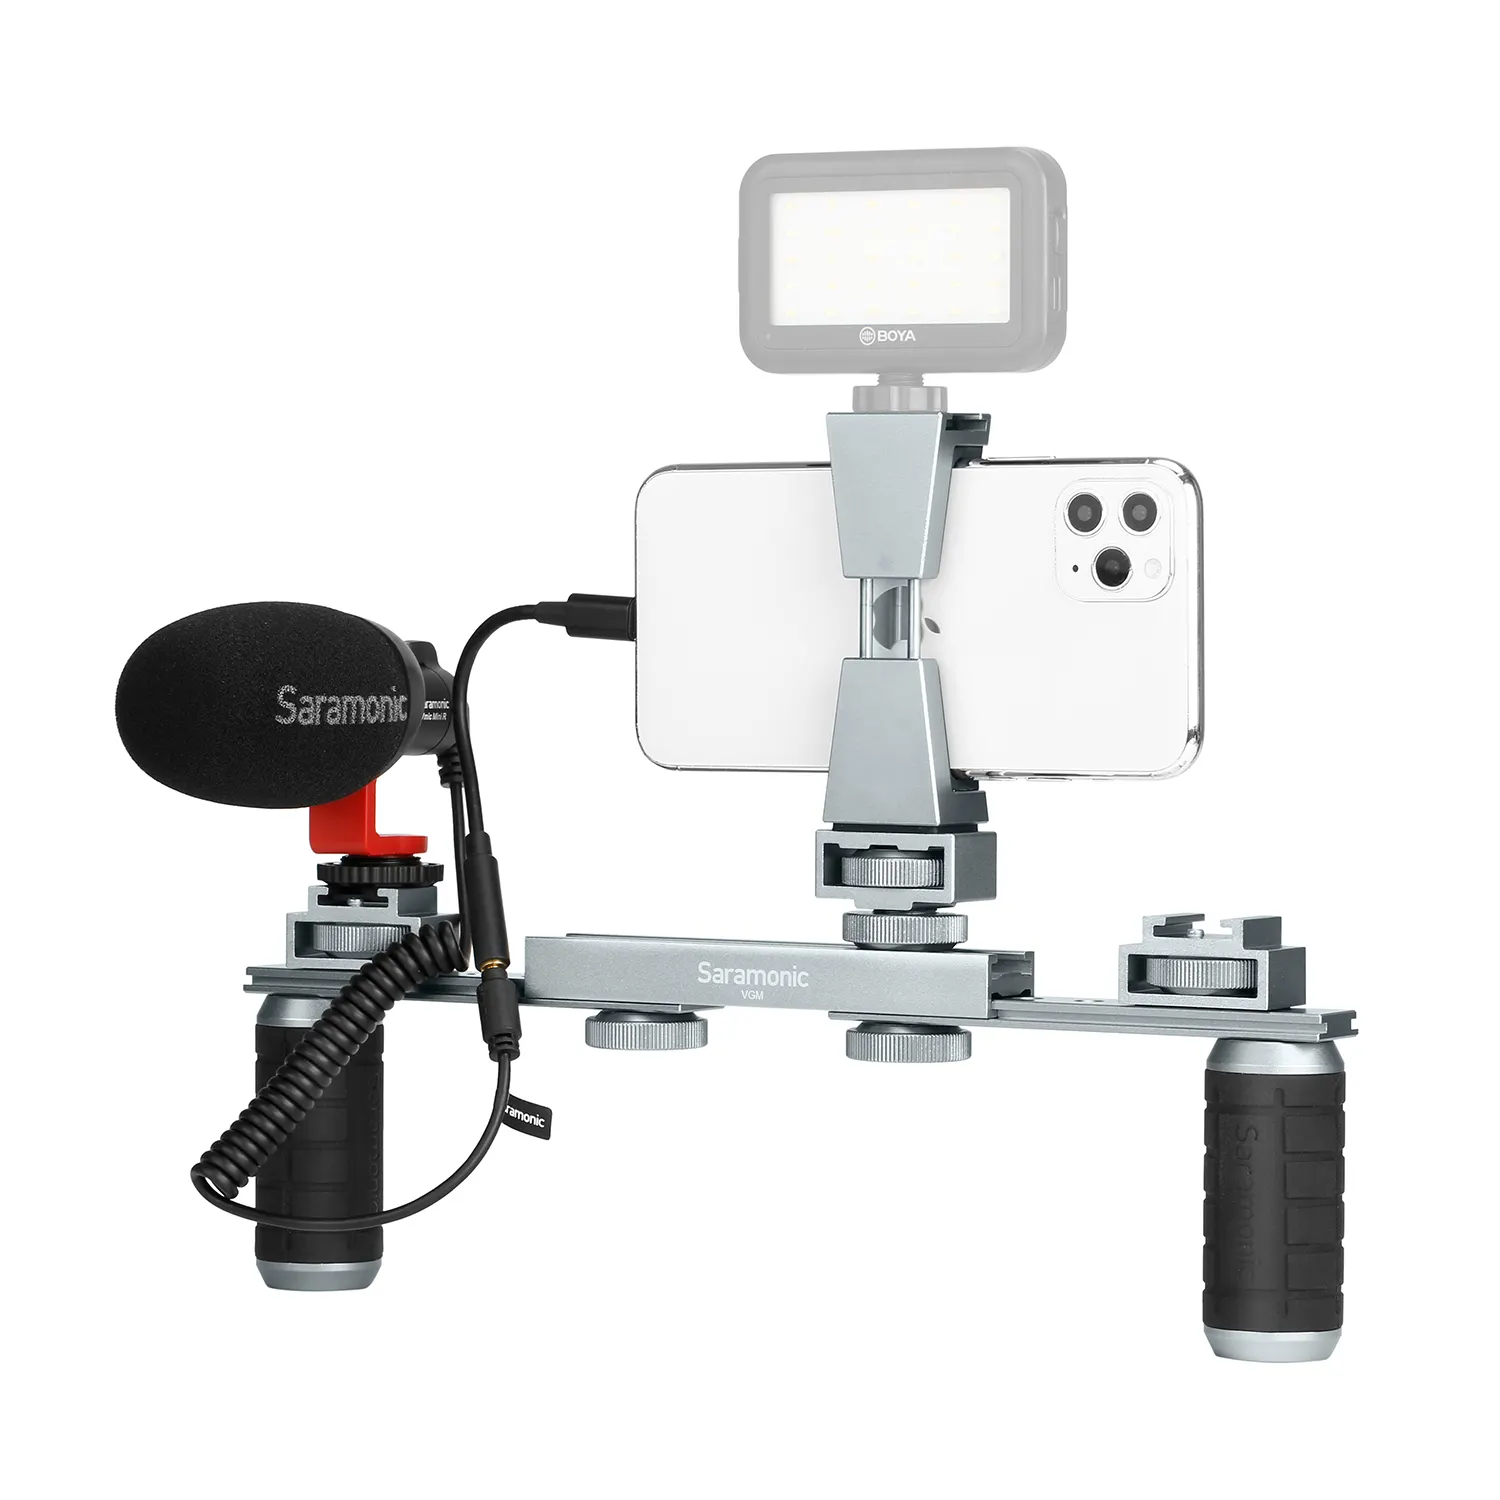 Saramonic VGM Professional vlogging kit for Camera Smartphone Video Recording with condenser Microphone LED Light Mini Tripod